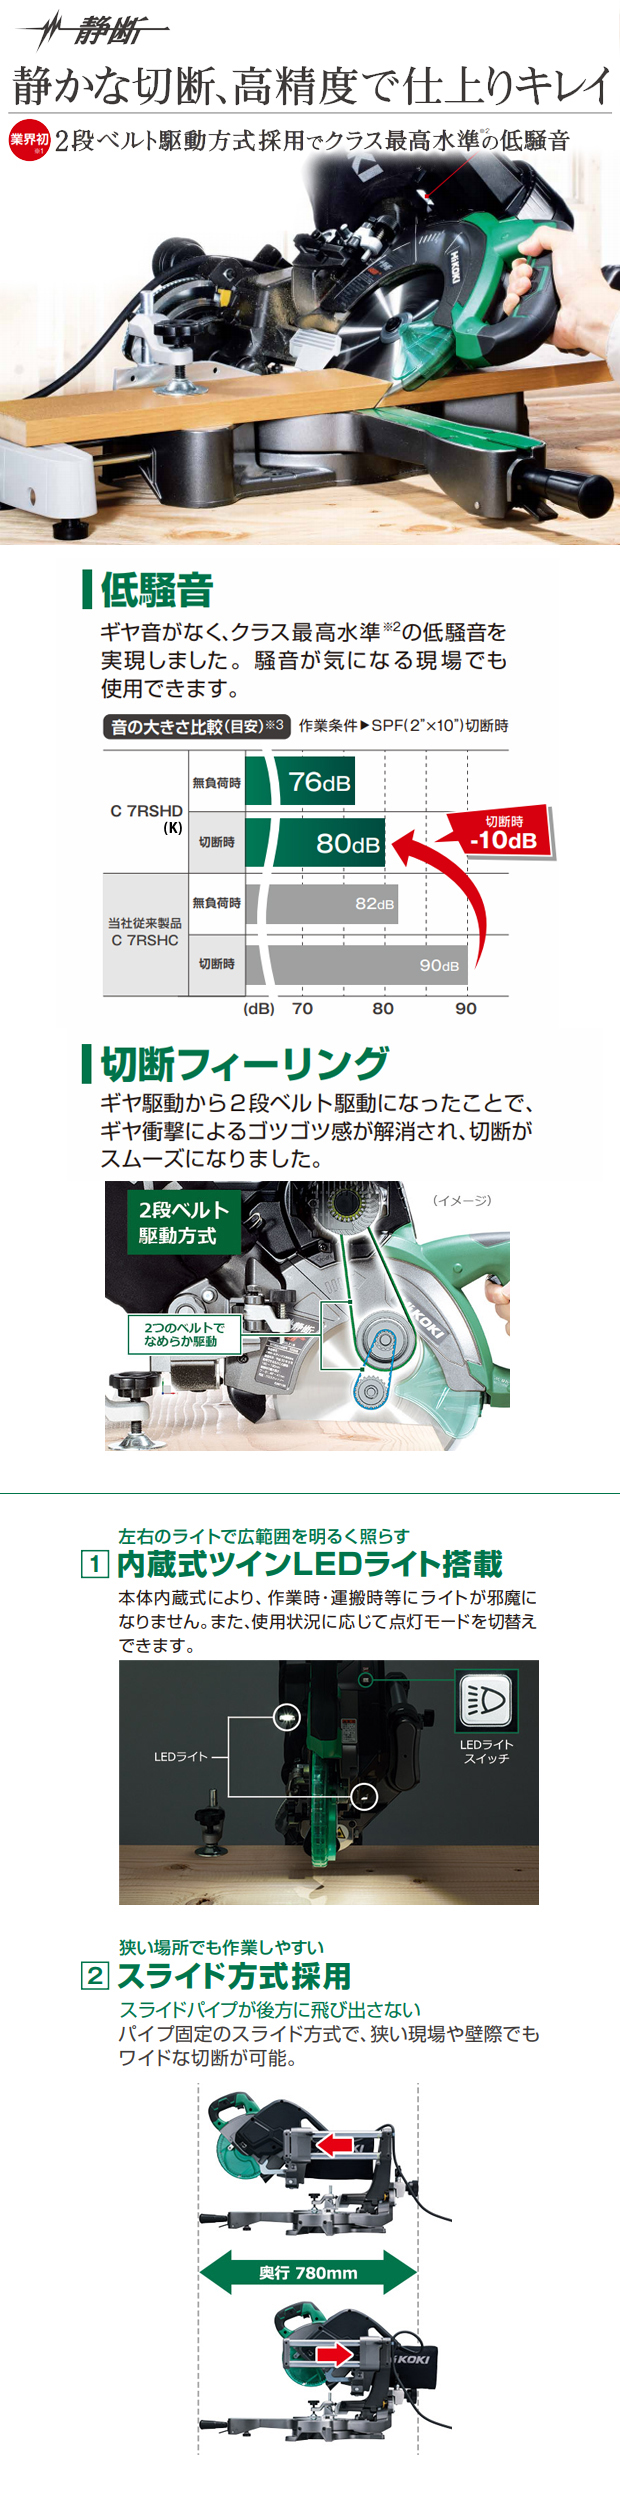 HiKOKI 190mm卓上スライドマルノコ C7RSHD(K) 電動工具・エアー工具